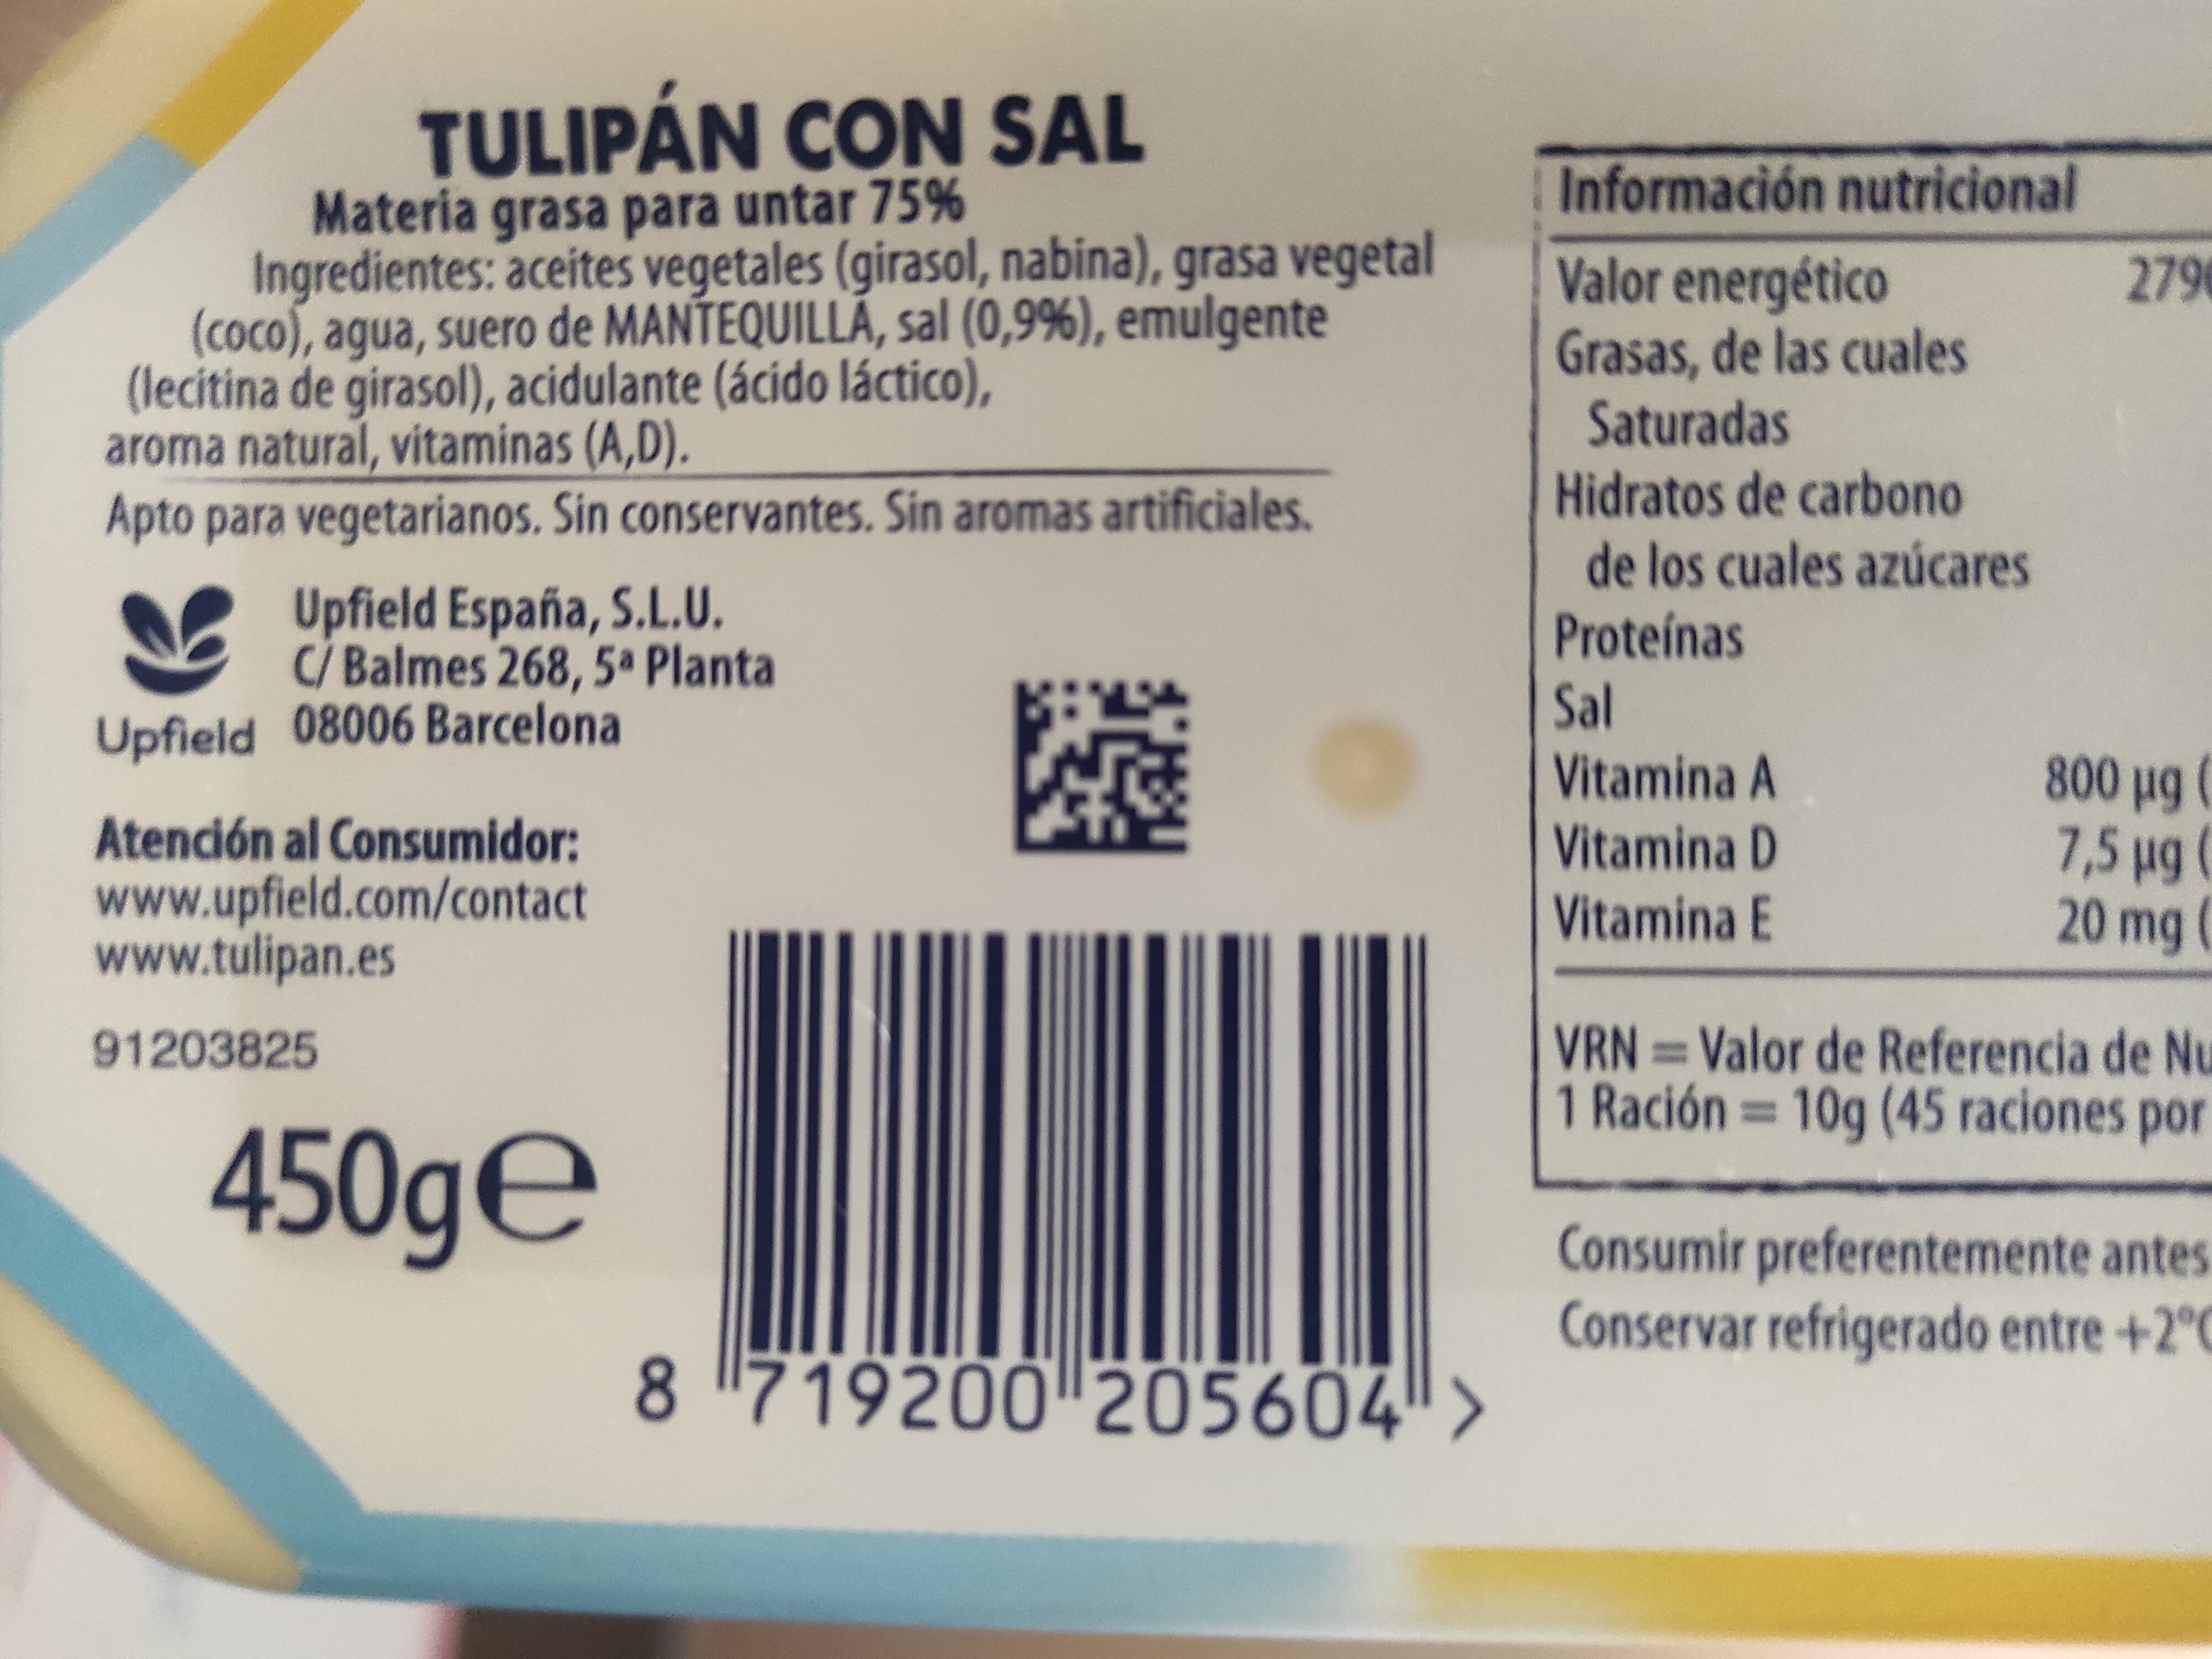 Margarina con sal - Ingredients - es